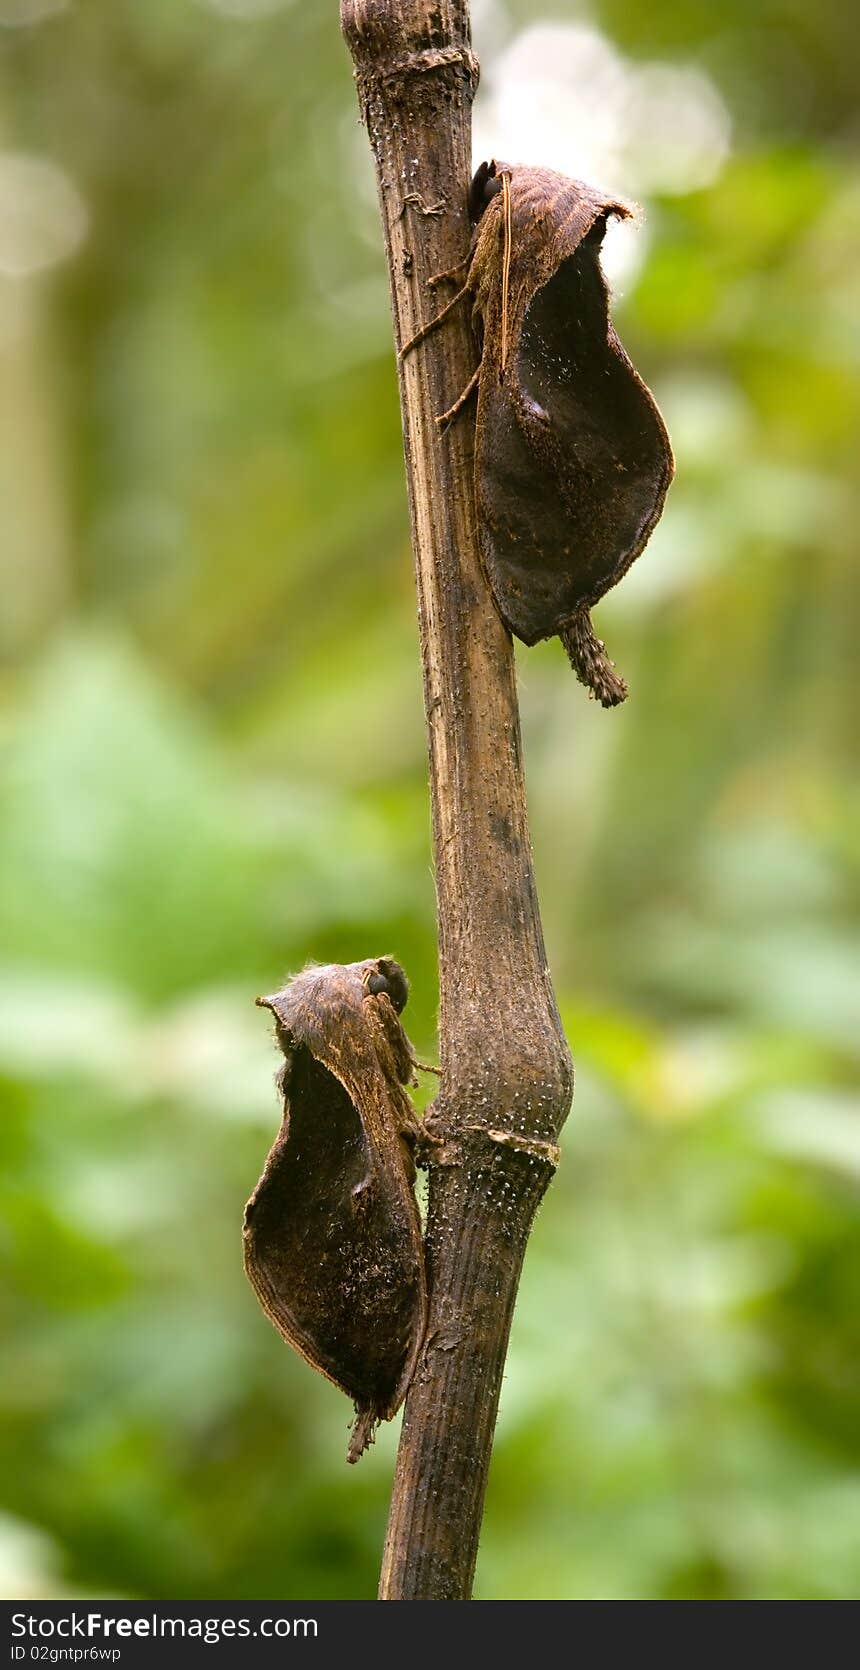 Moths on a branch, shot in Costa Rica